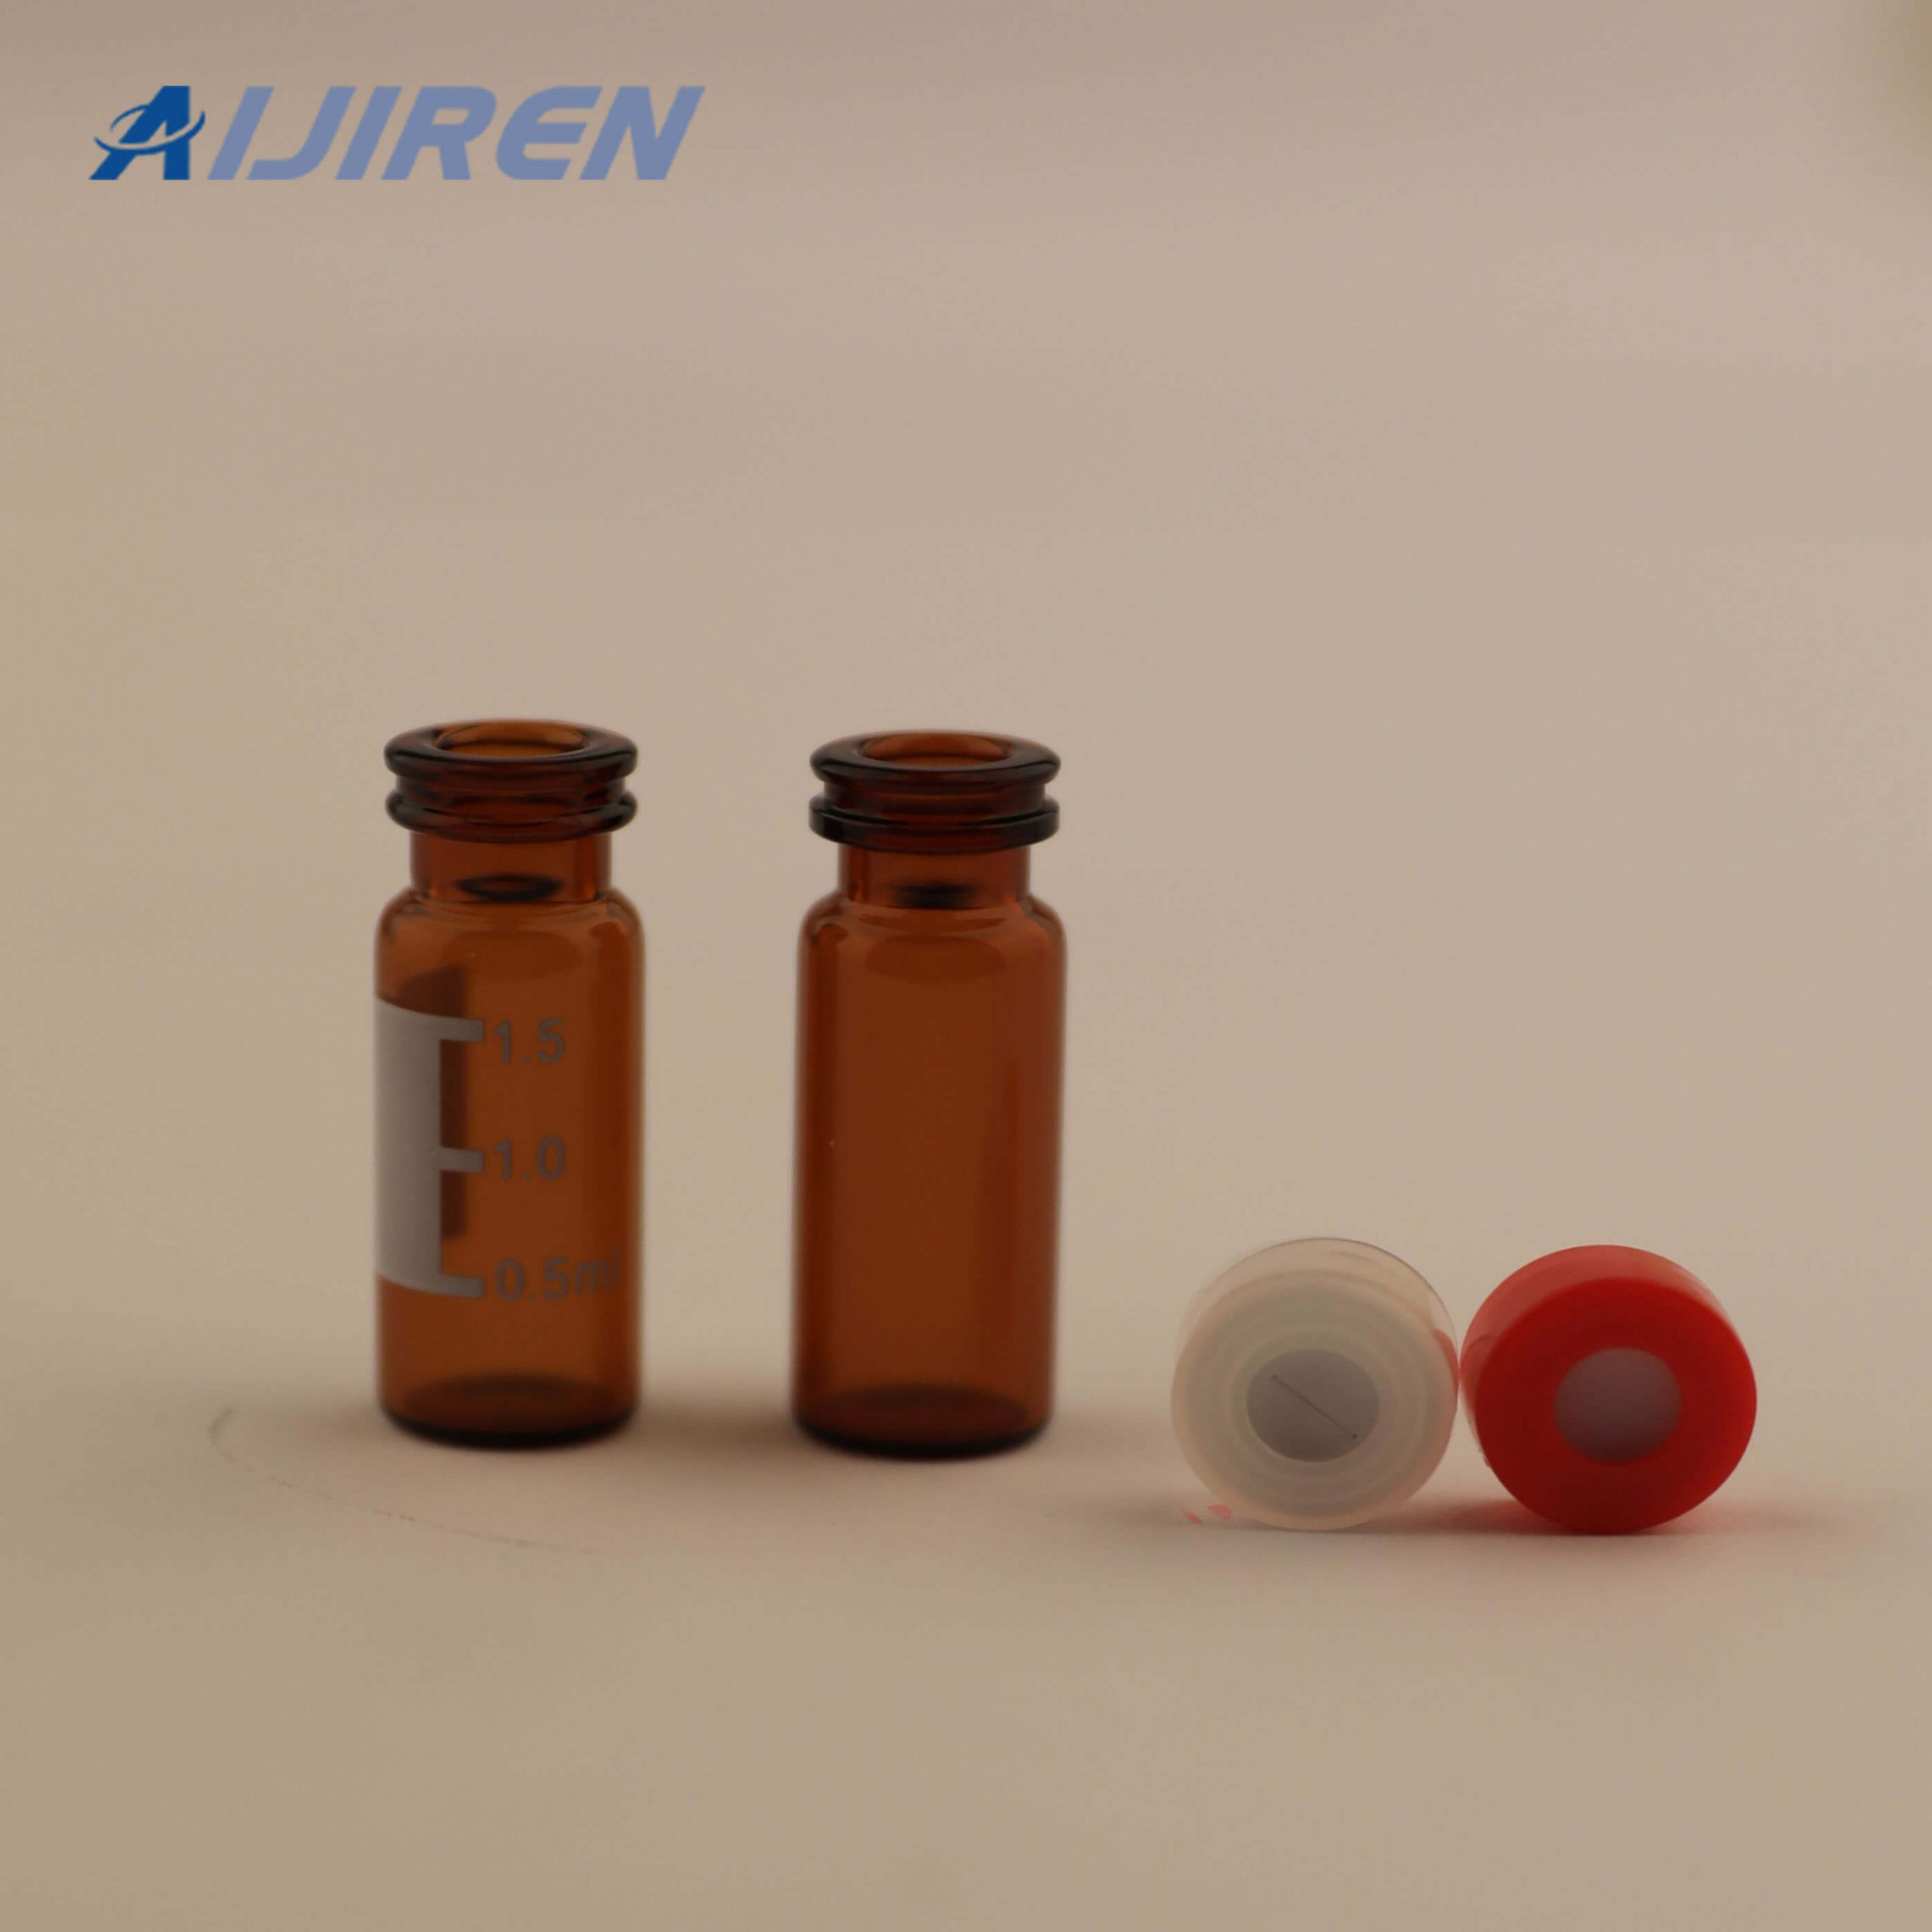 Amber Glass Snap Vials for HPLC for Aijiren